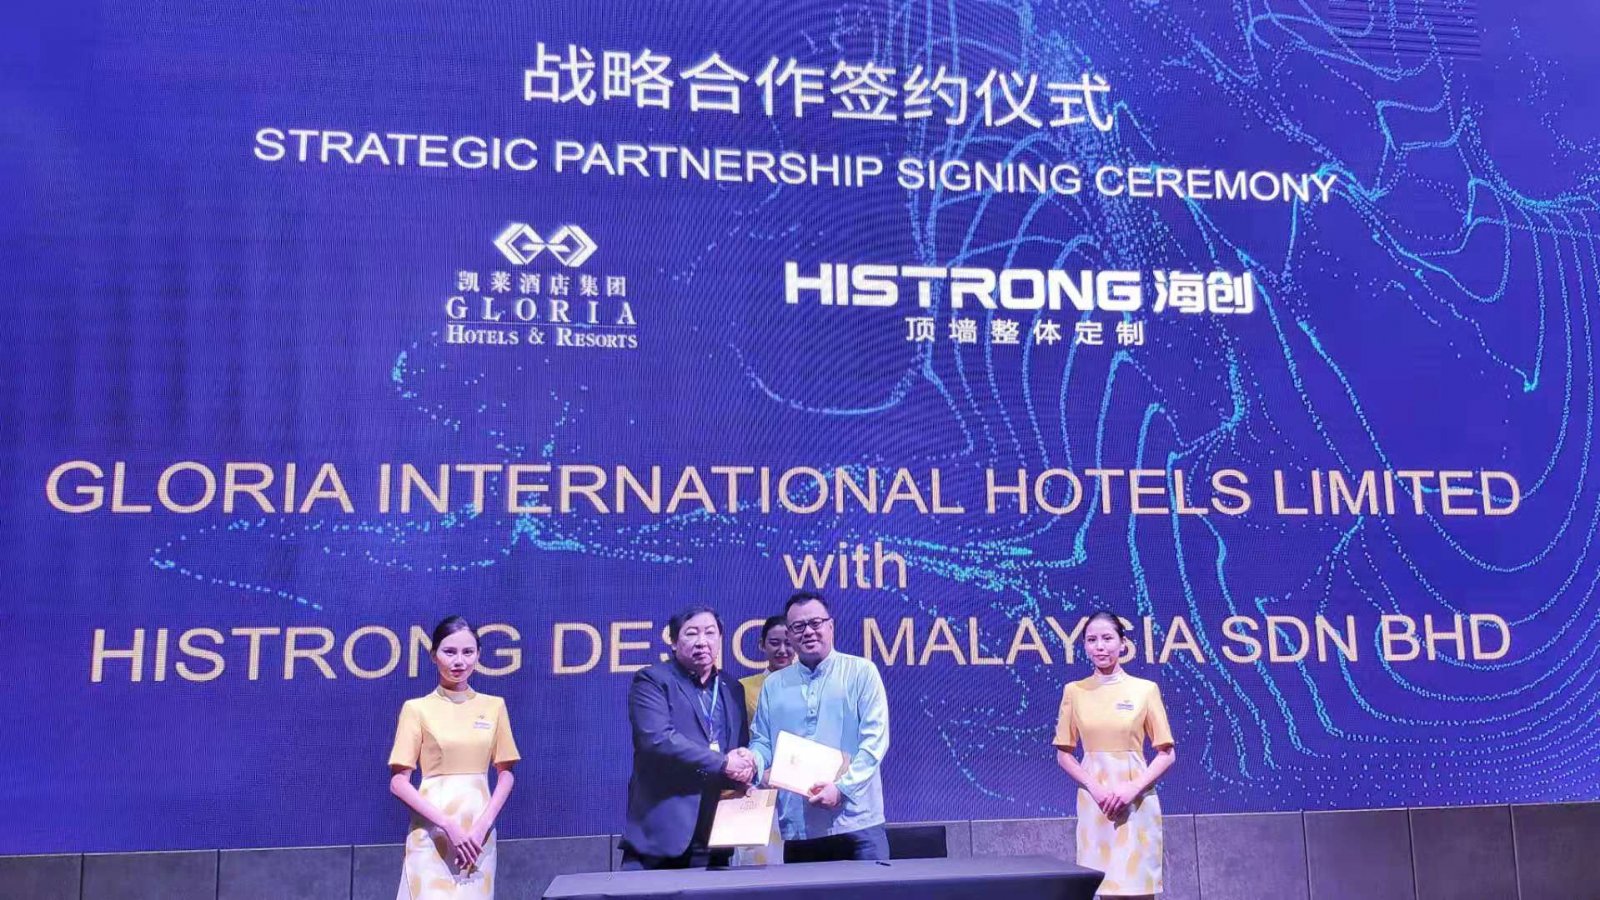 Strategic Partnership Between Gloria International Hotels Limited and HISTRONG Design